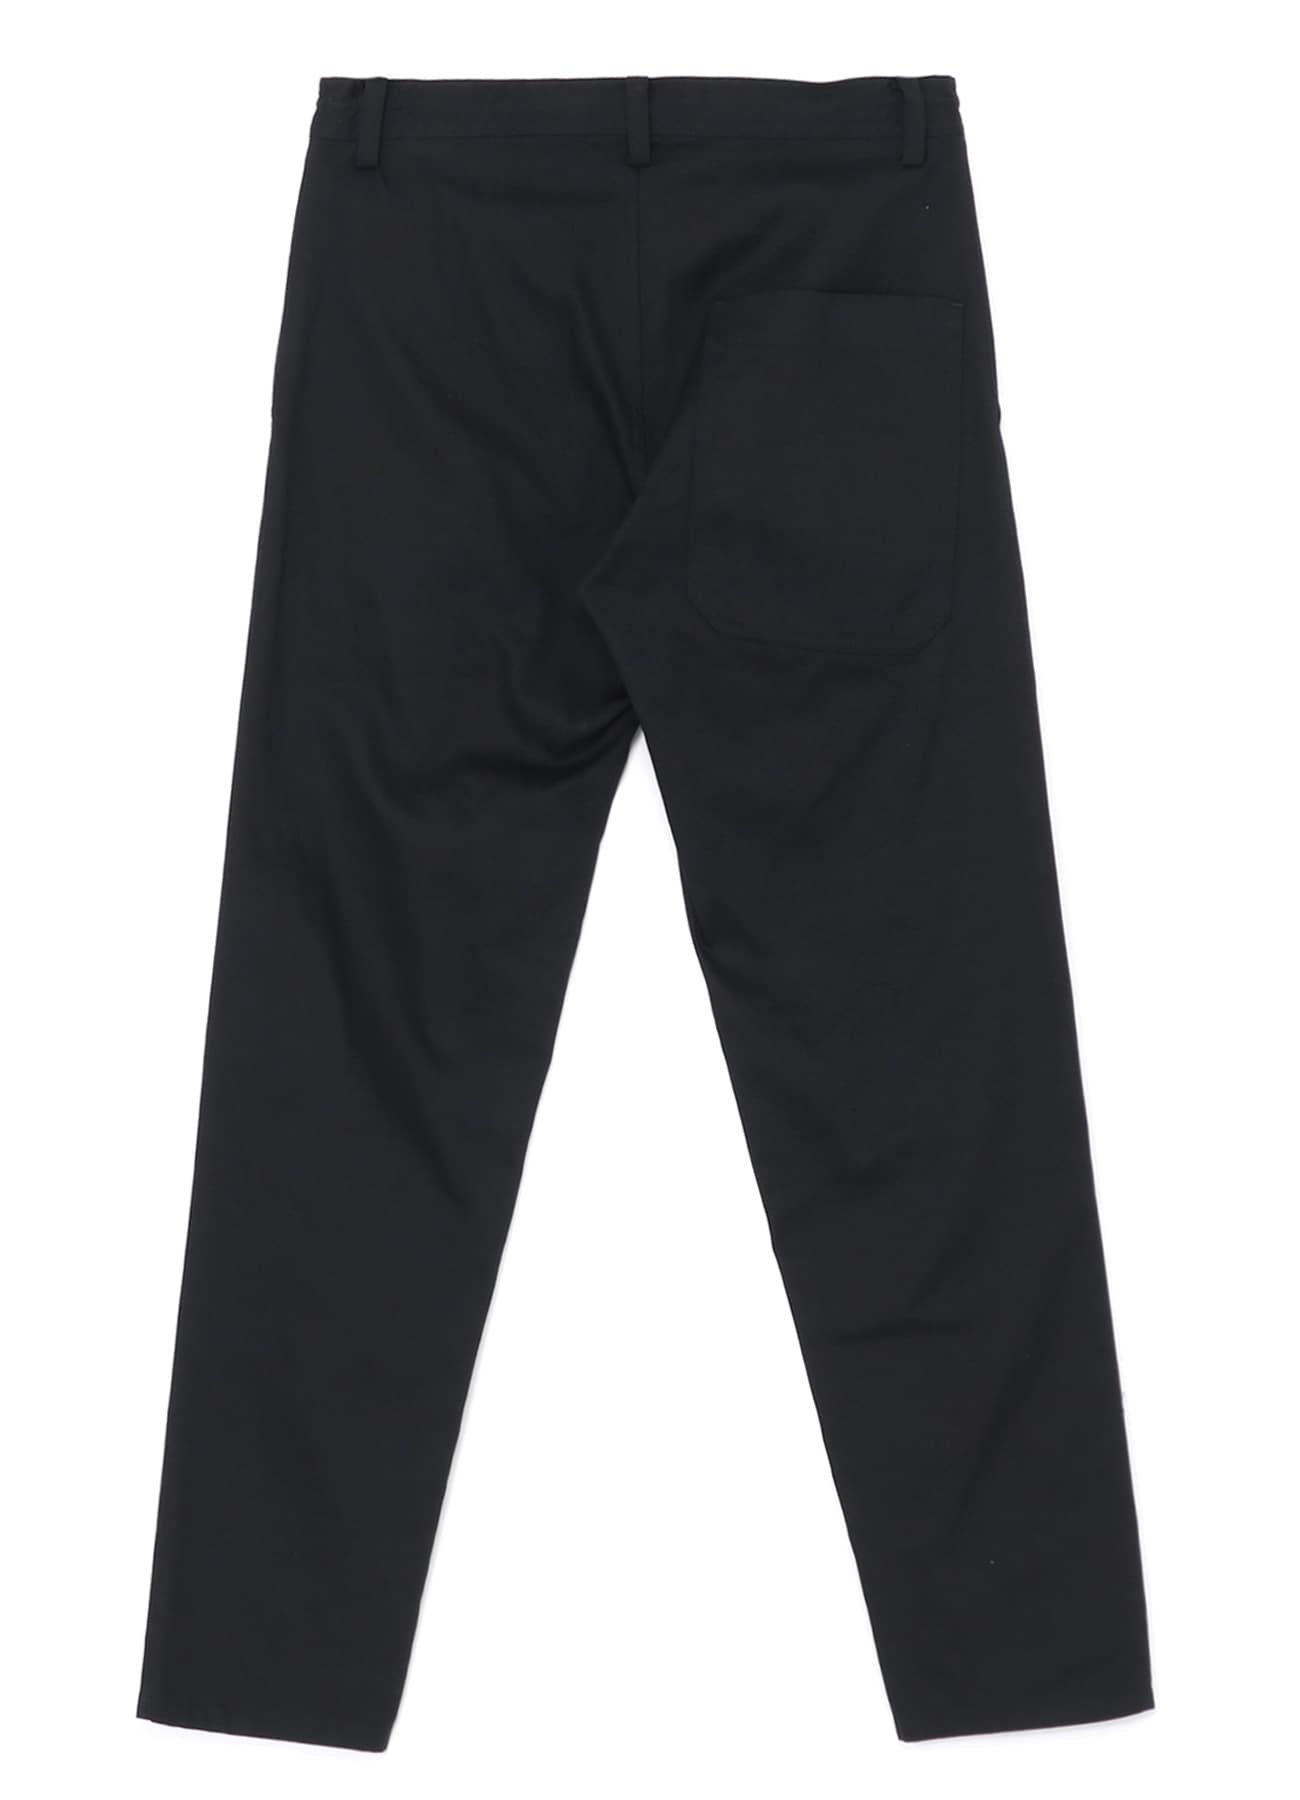 NWOT Main Street black V-Front Black Jazz Pants Polyester spandex medium  child